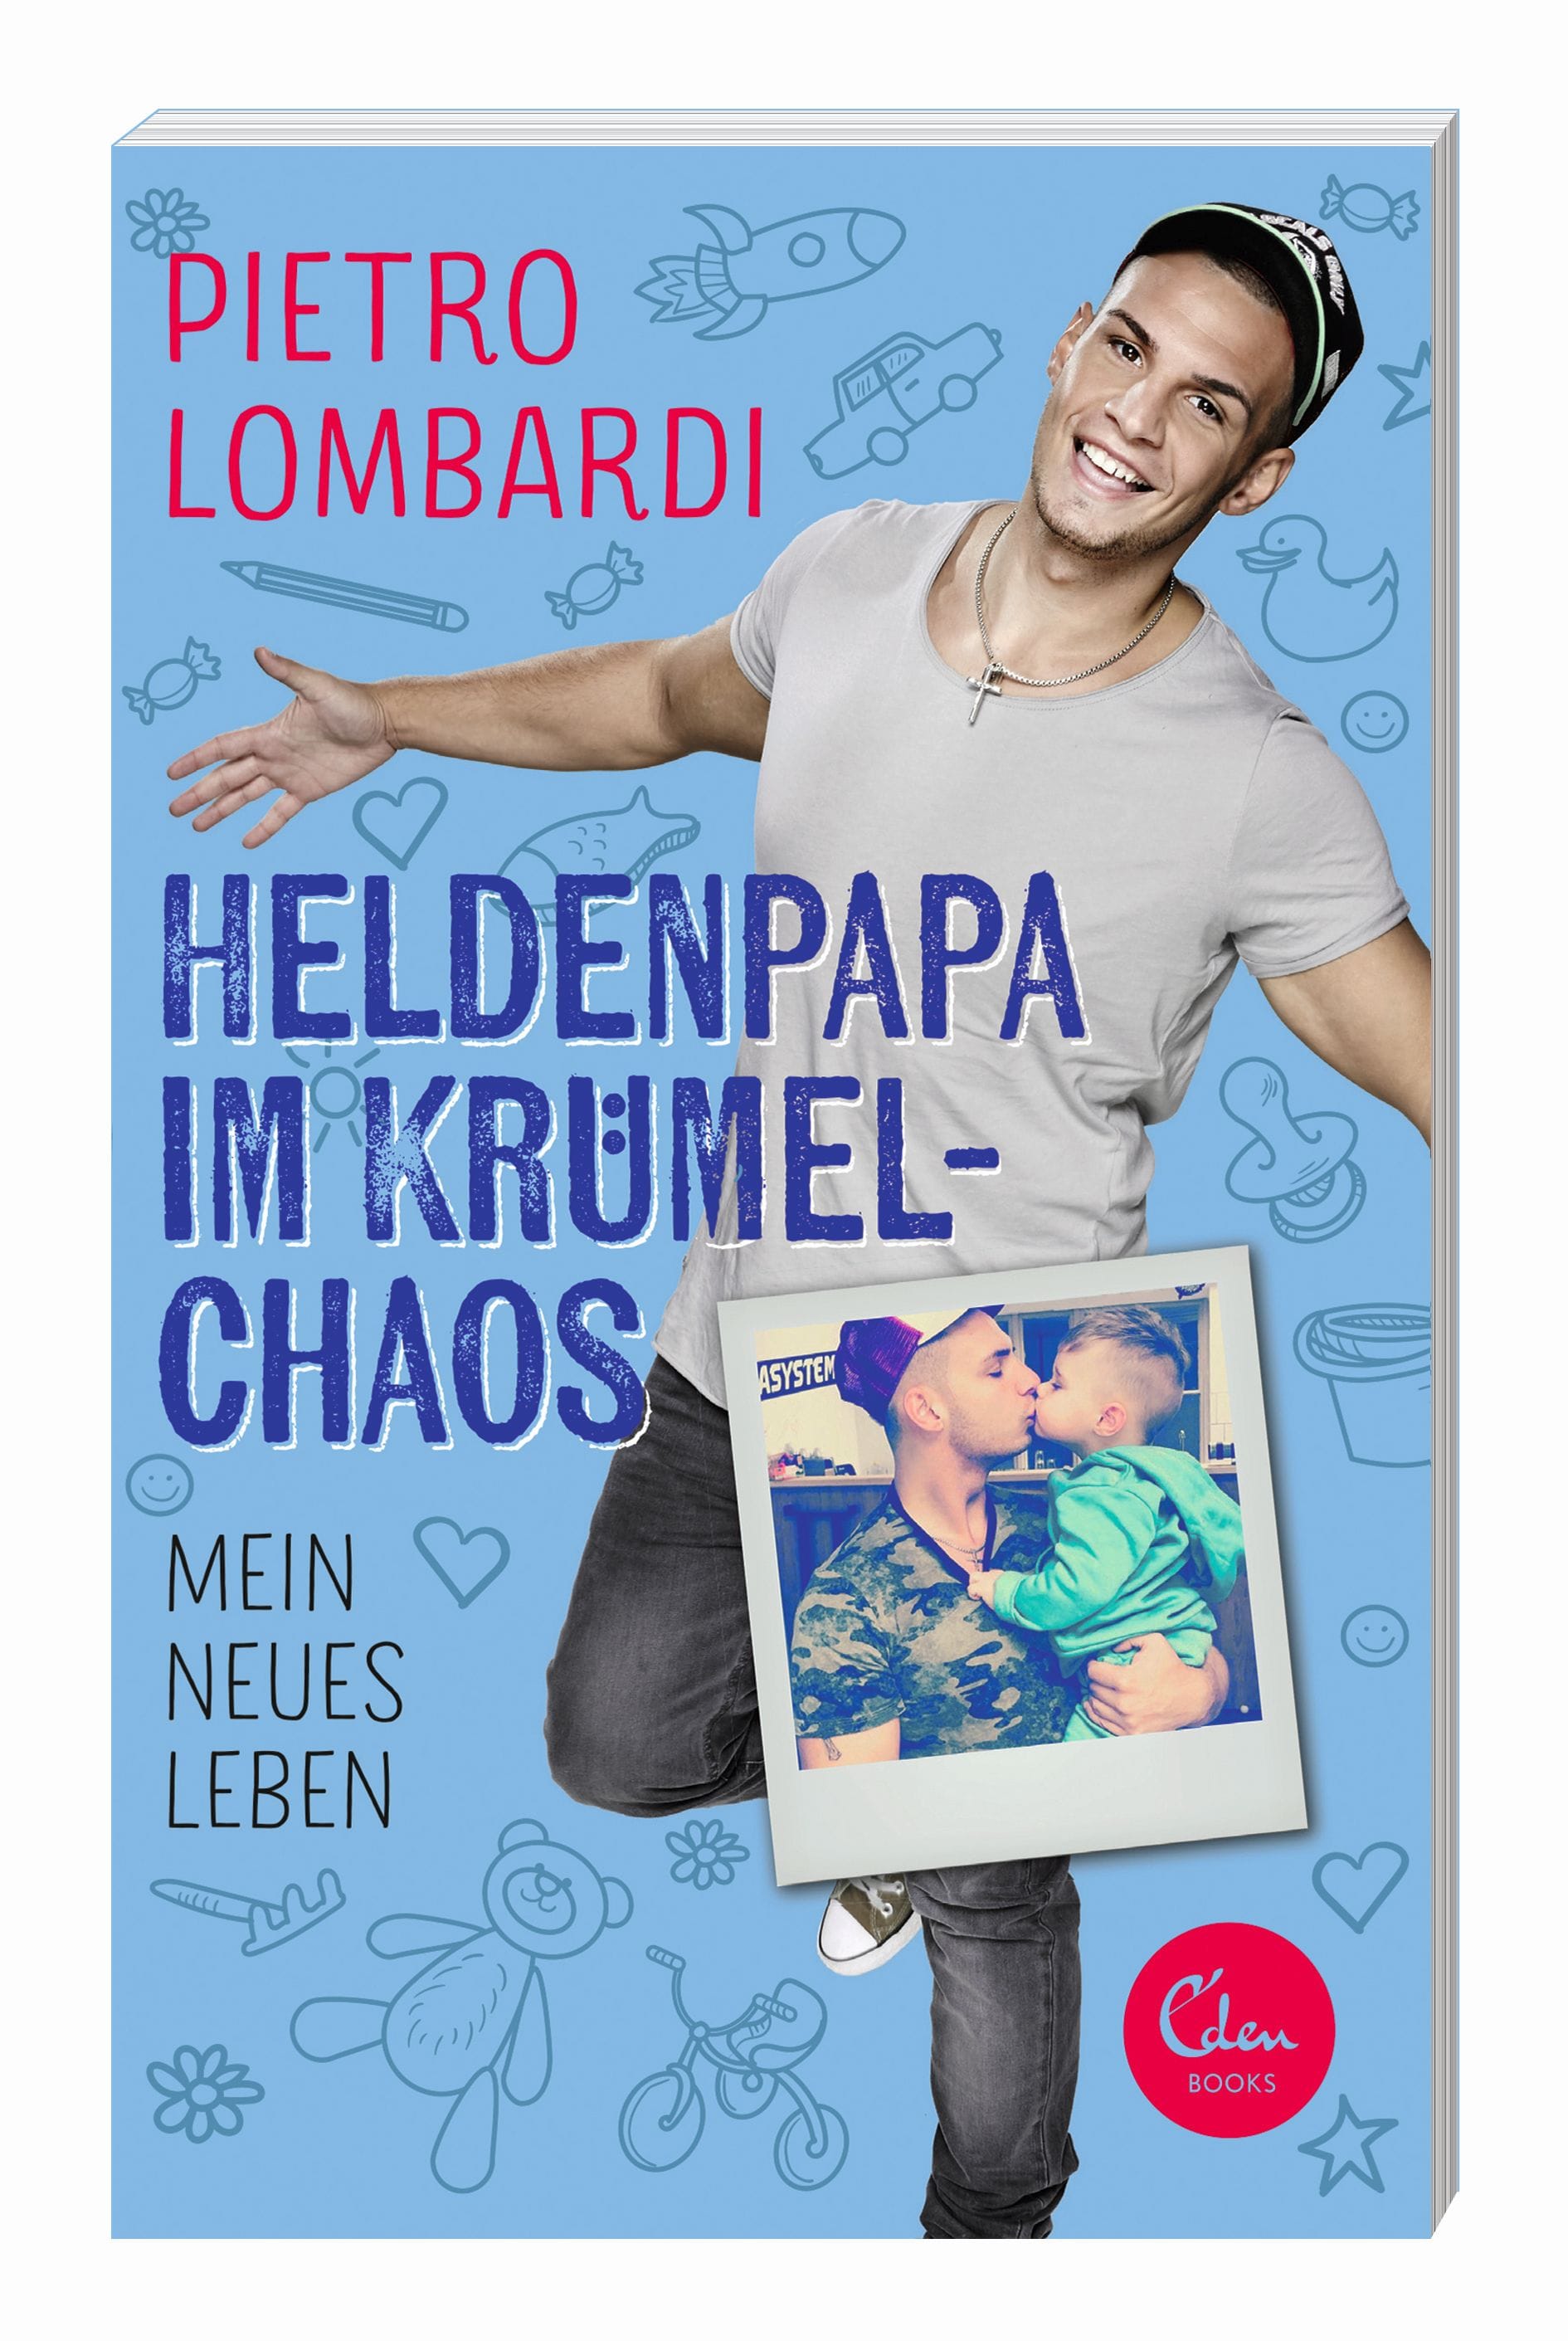 Pietro Lombardi: Sein Buch heißt "Heldenpapa im Krümelchaos".